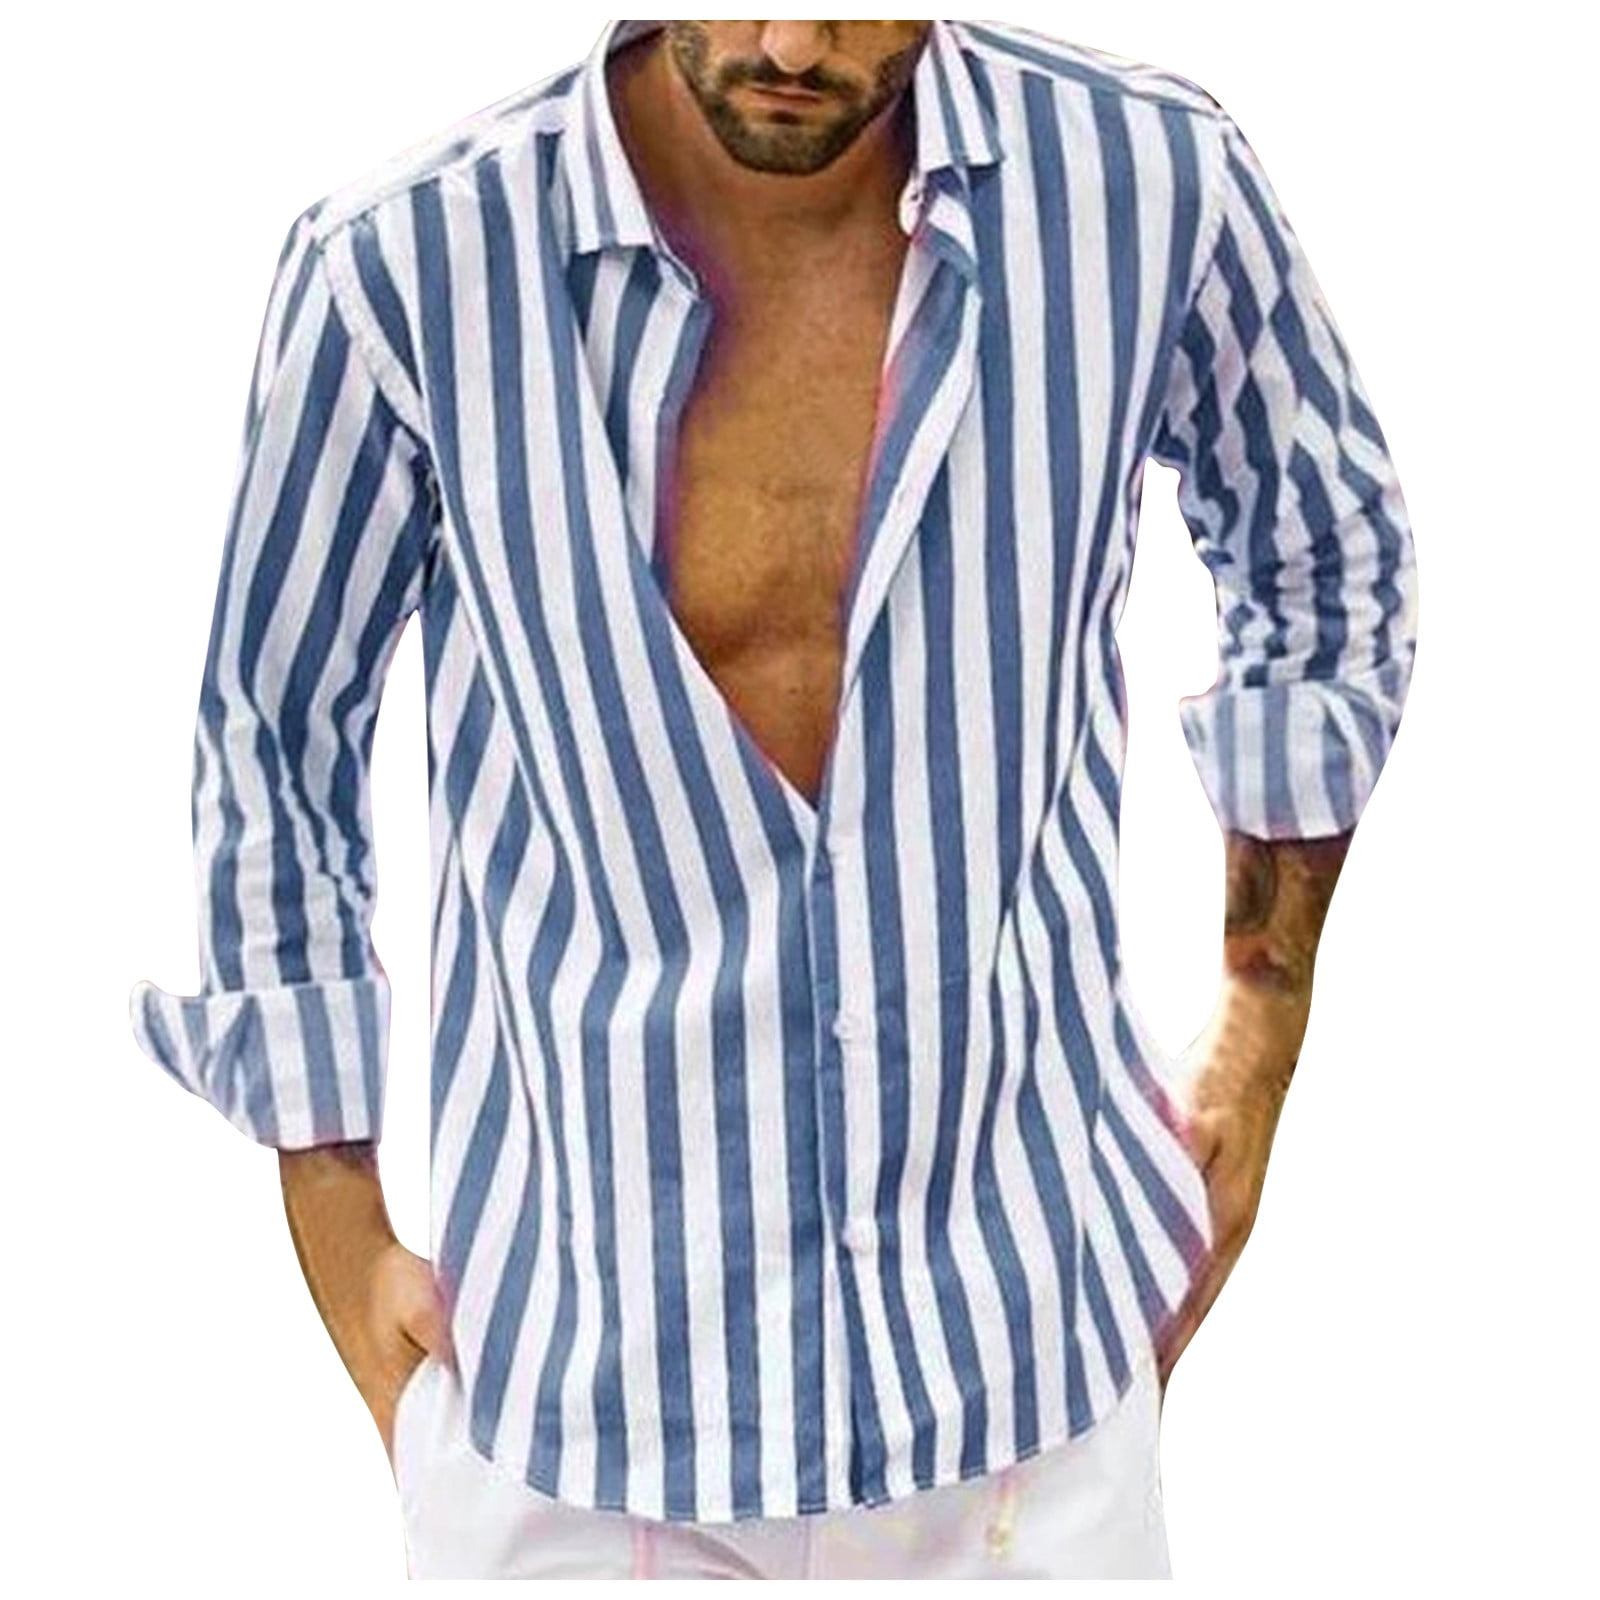 Men Striped Shirts Long Sleeve,SIN+MON Mens Fashion Slim Fit Button Down Shirt Vertical Striped Dress Shirt Blouse Top Tee 